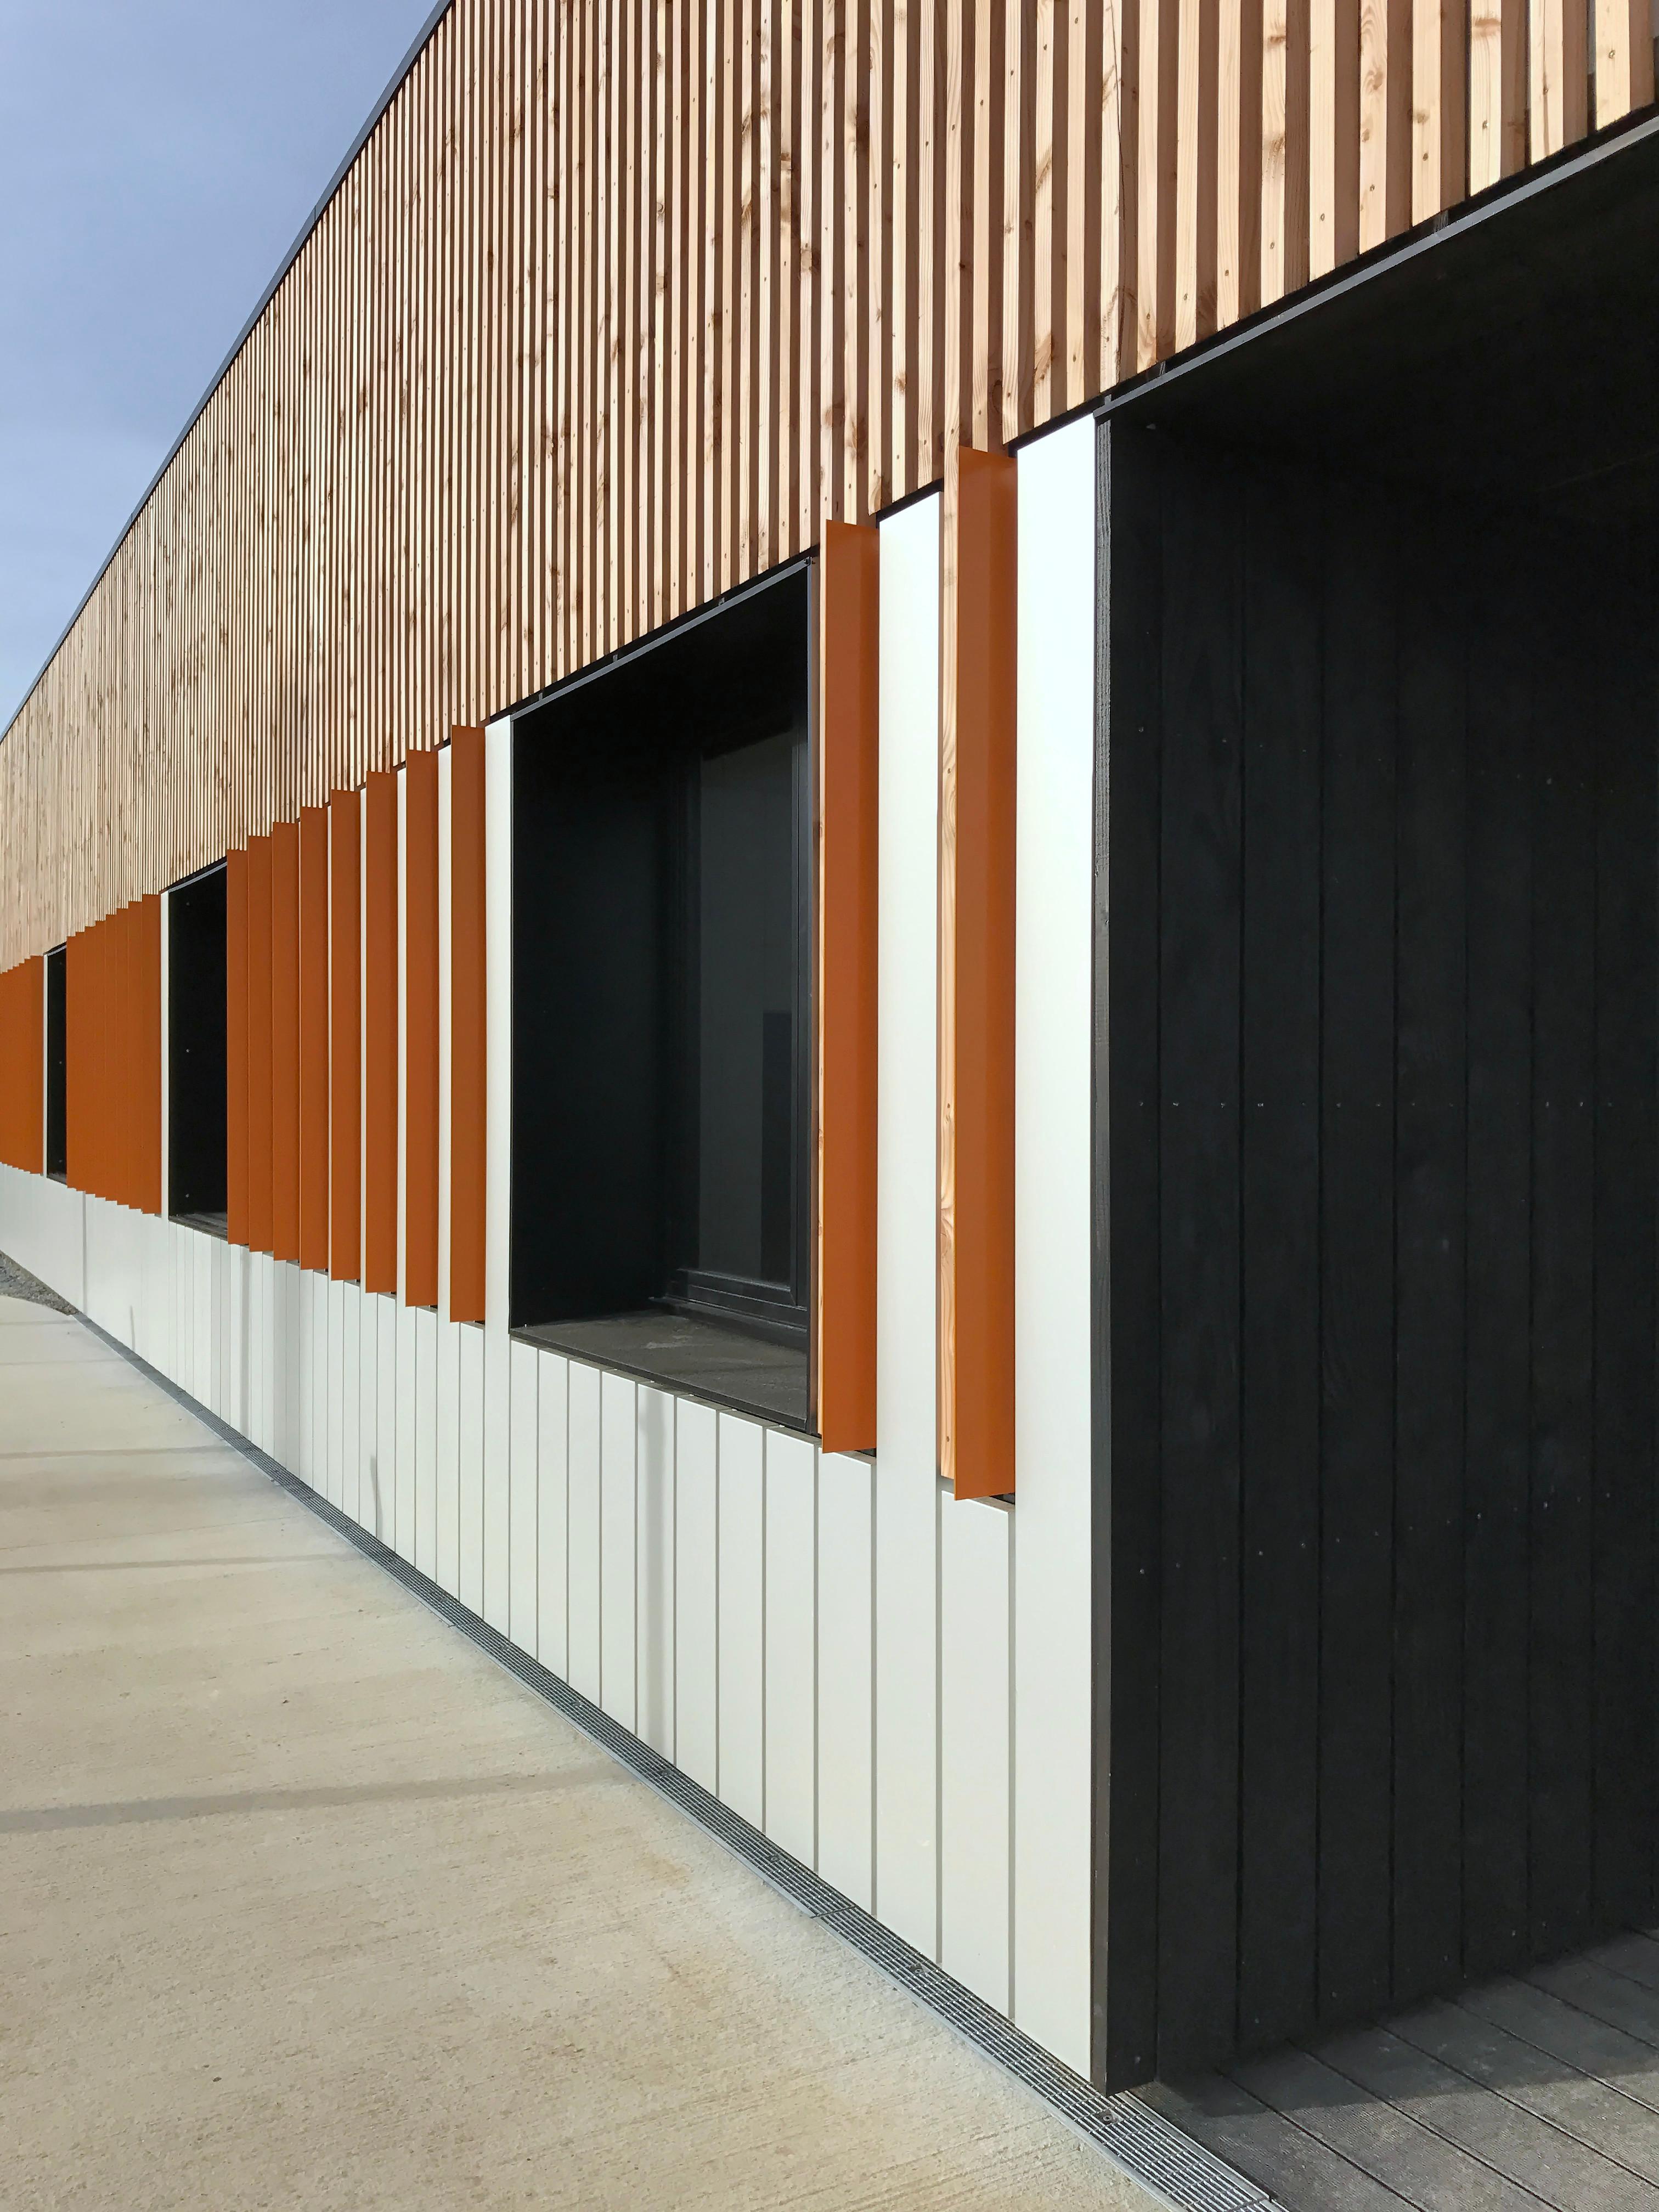 Photographie de la façade Sud. Cassettes aluminium brut, bardage bois & équerres en aluminium laquées orange.